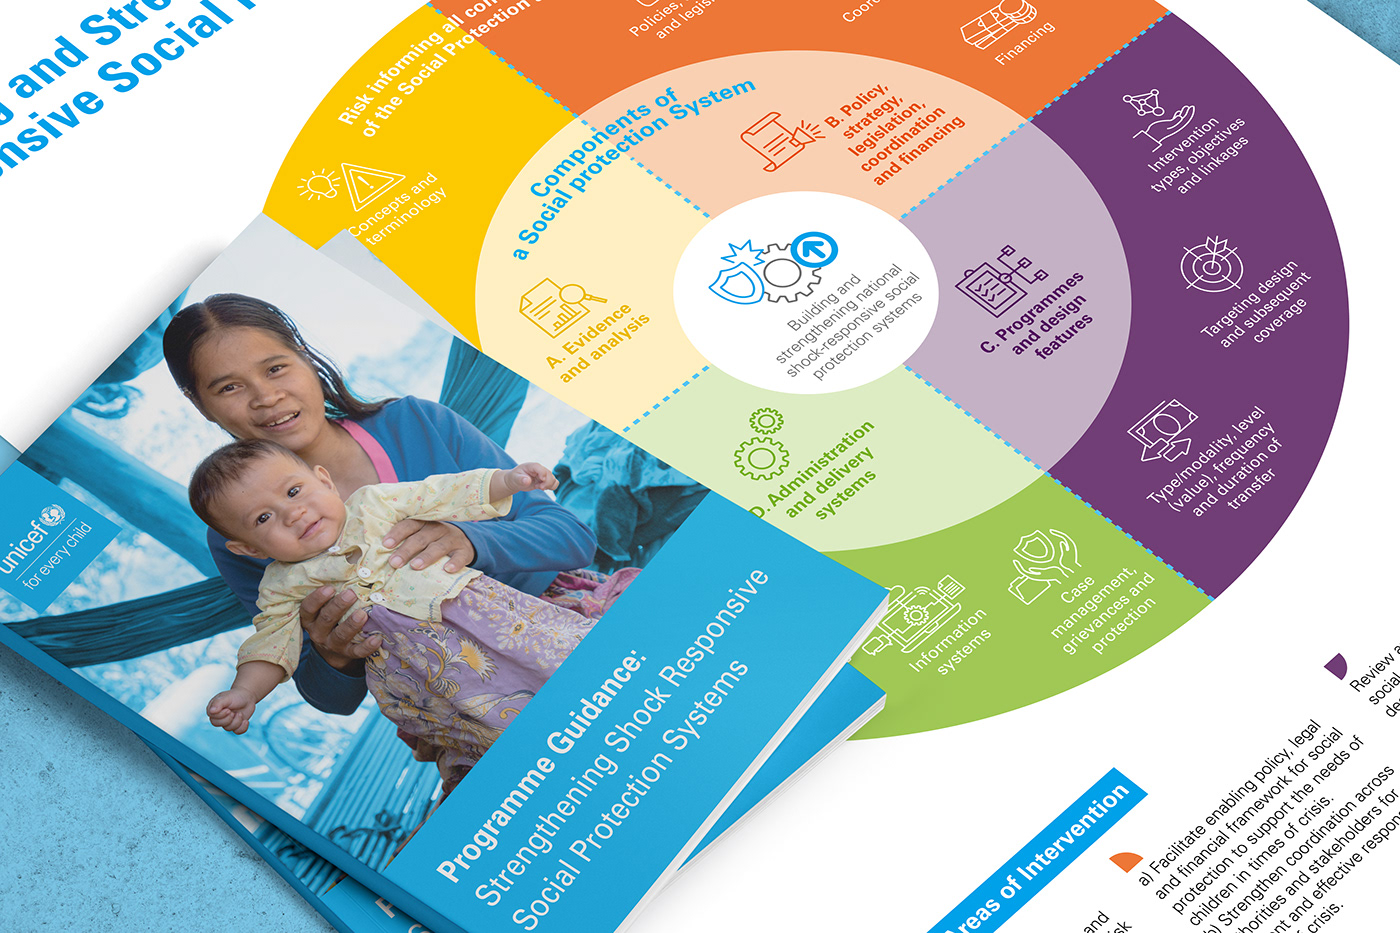 unicef infographic un climate change Social Protection Vulnerable children world food program Refugees editorial design  branding 